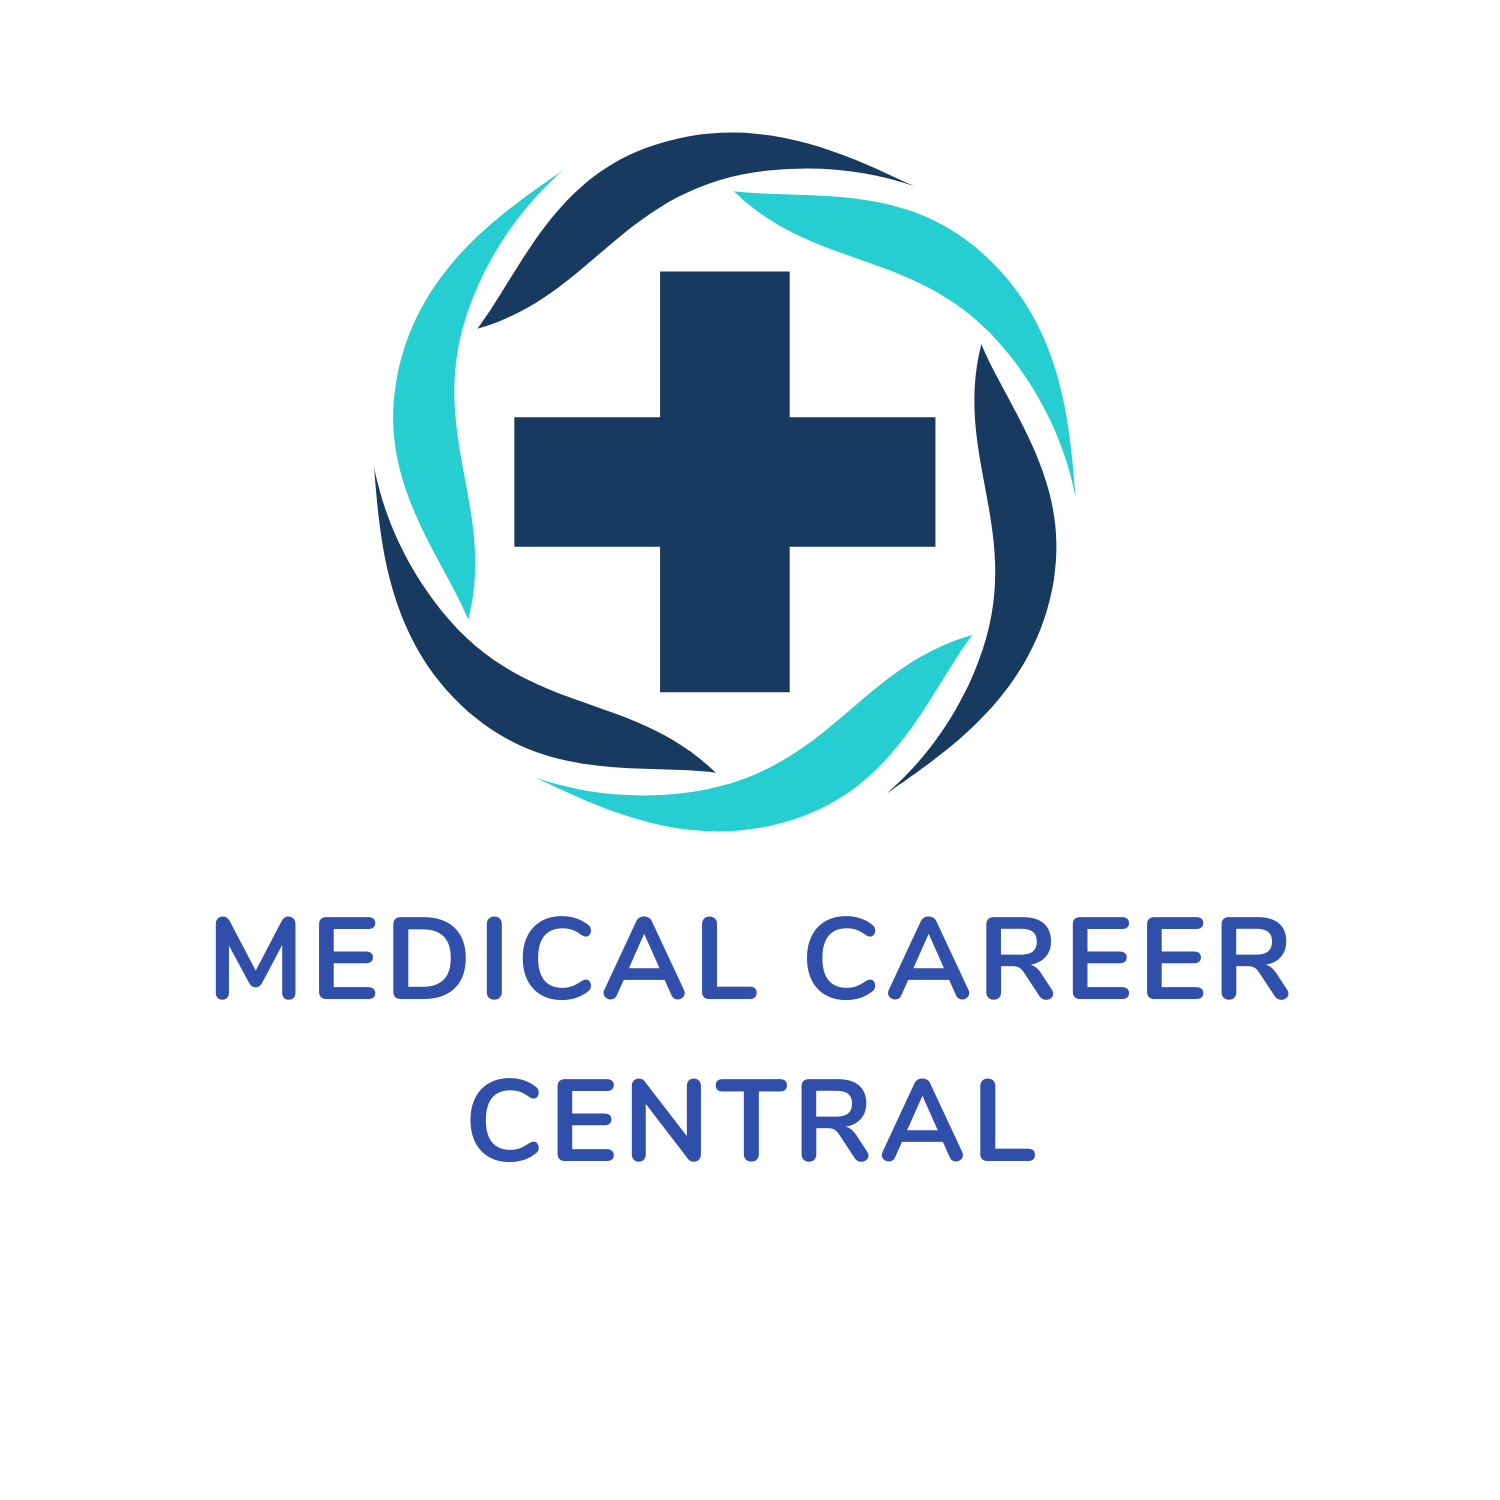 Medical Career Central – Website Domain For Sale